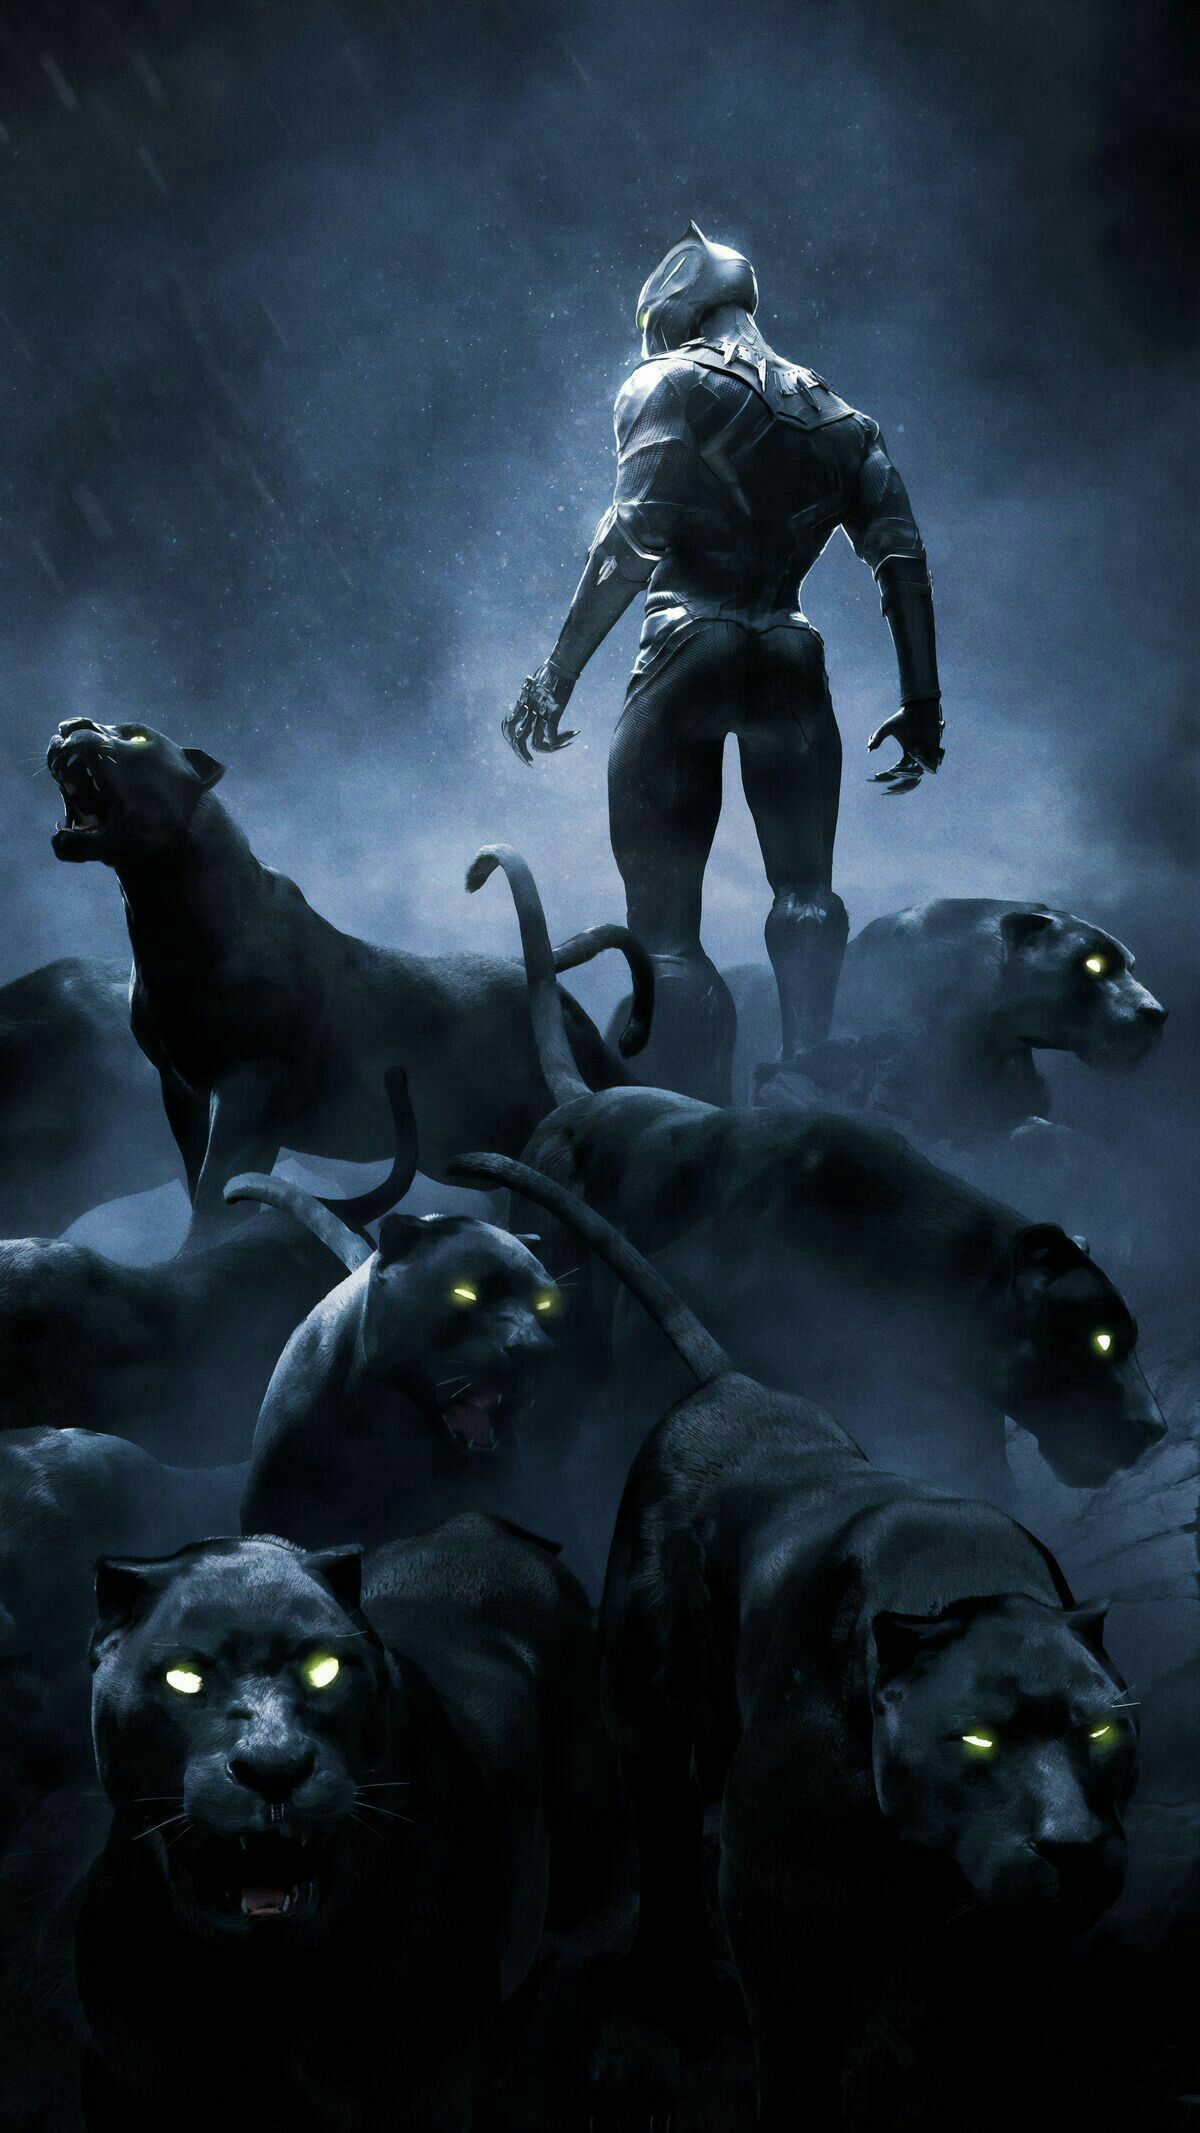 Favorites. Black panther marvel, Black panther HD wallpaper, Marvel superhero posters